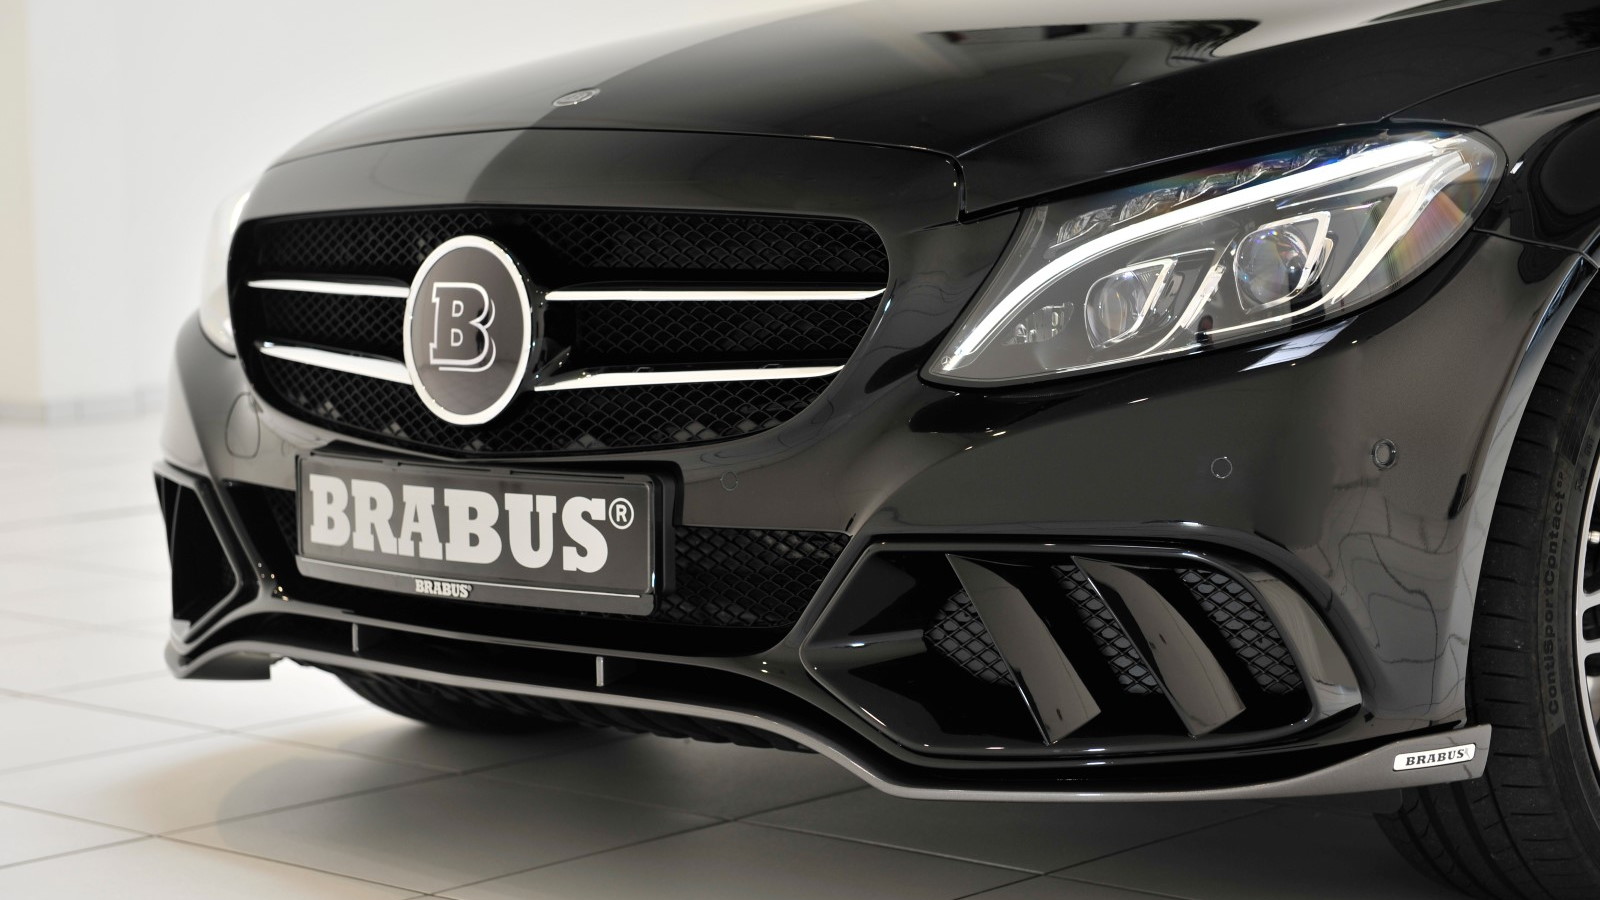 BRABUS program for the 2015 Mercedes-Benz C-Class